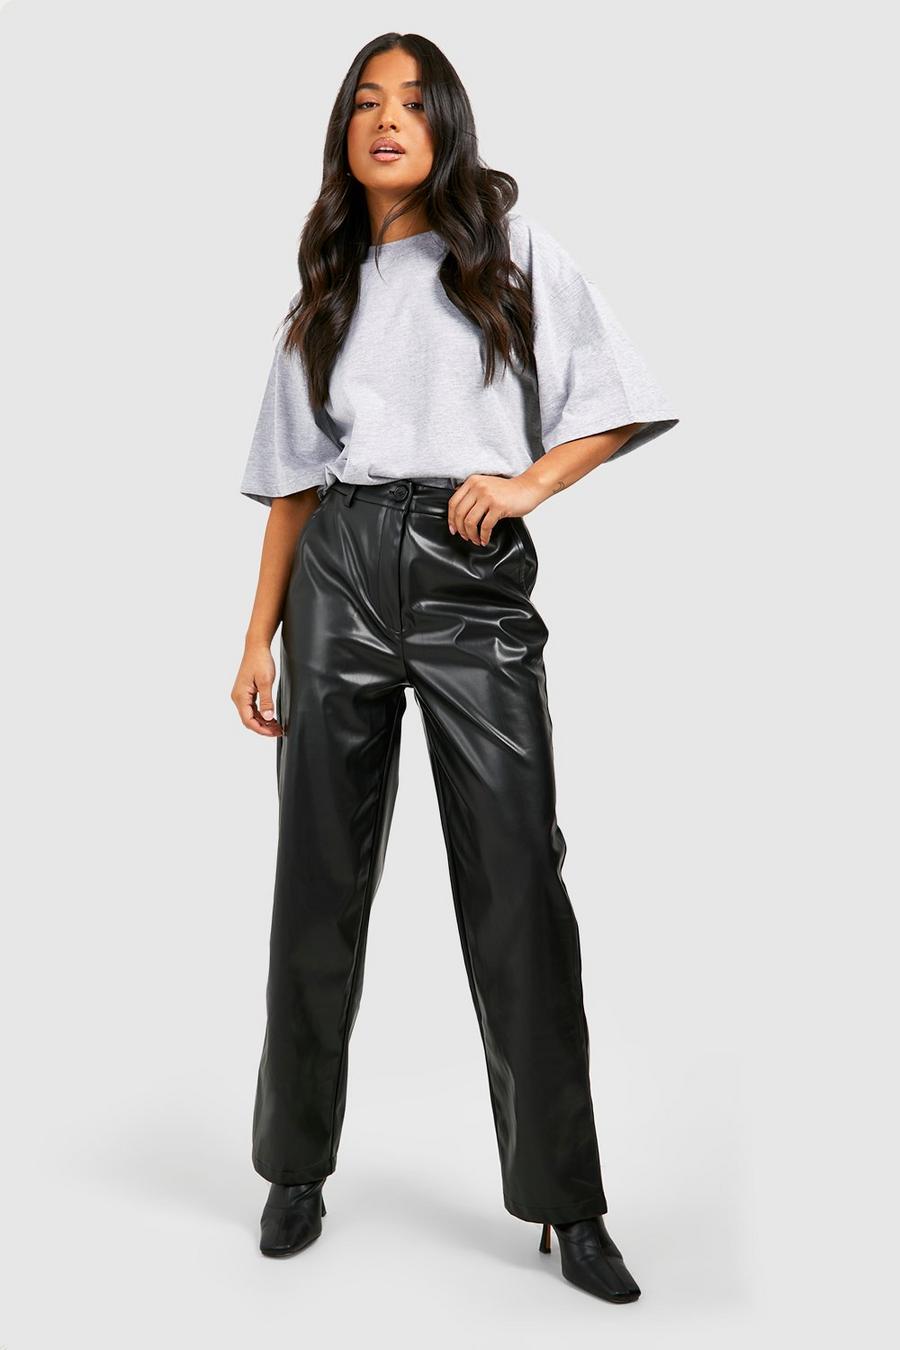 https://media.boohoo.com/i/boohoo/gzz70620_black_xl/female-black-petite-faux-leather-tailored-straight-leg-trouser/?w=900&qlt=default&fmt.jp2.qlt=70&fmt=auto&sm=fit